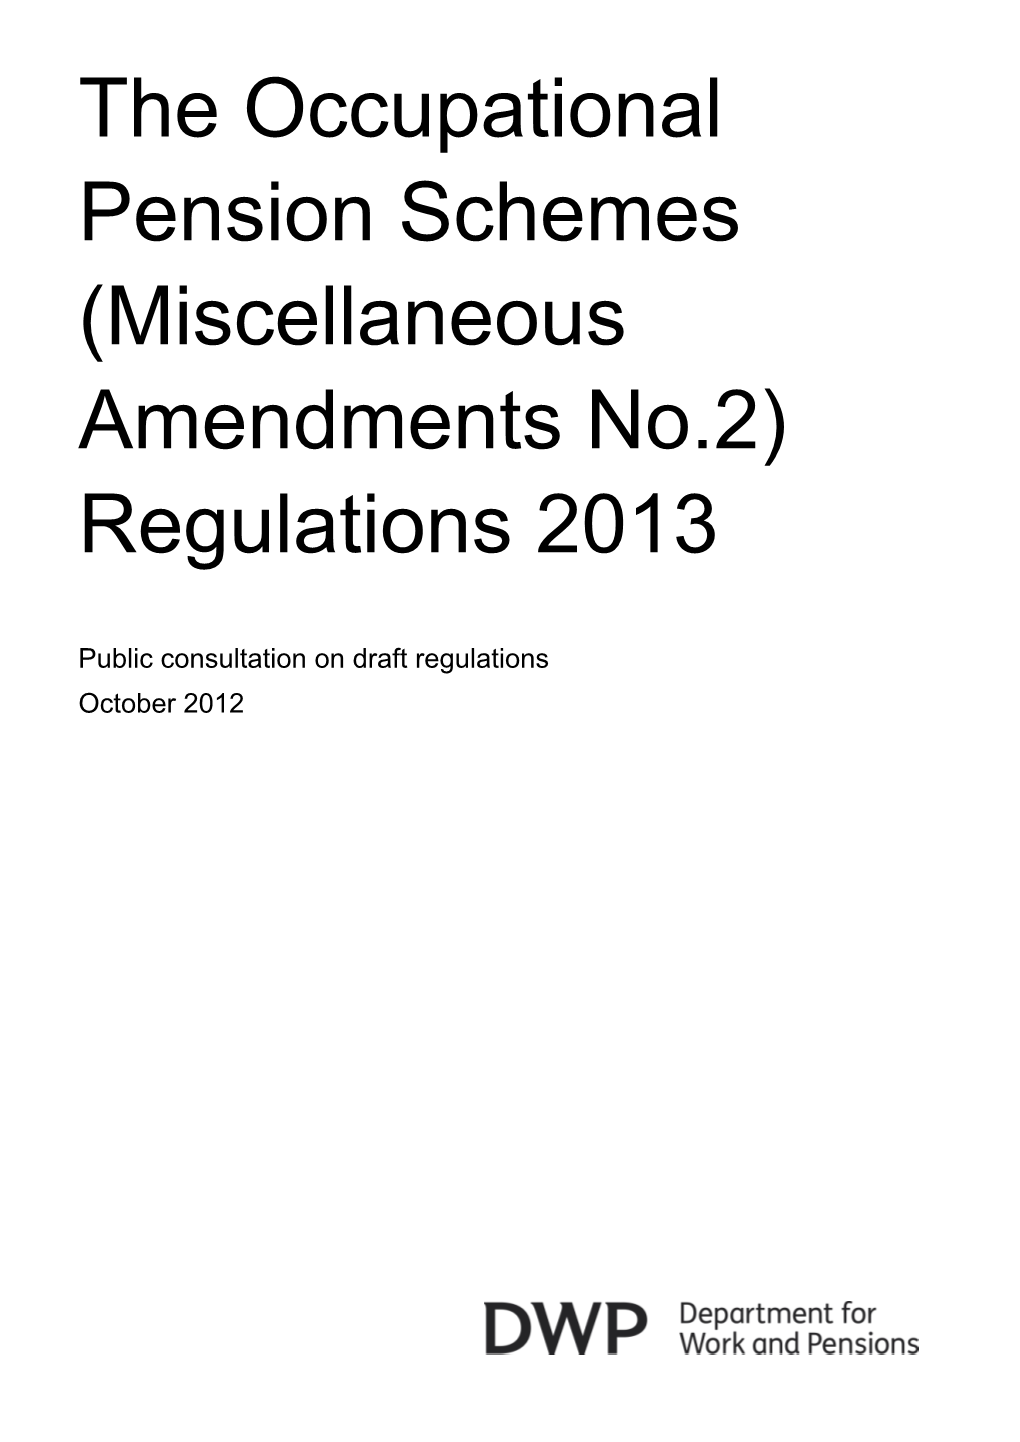 The Occupational Pension Schemes (Miscellaneous Amendments No.2) Regulations 2013